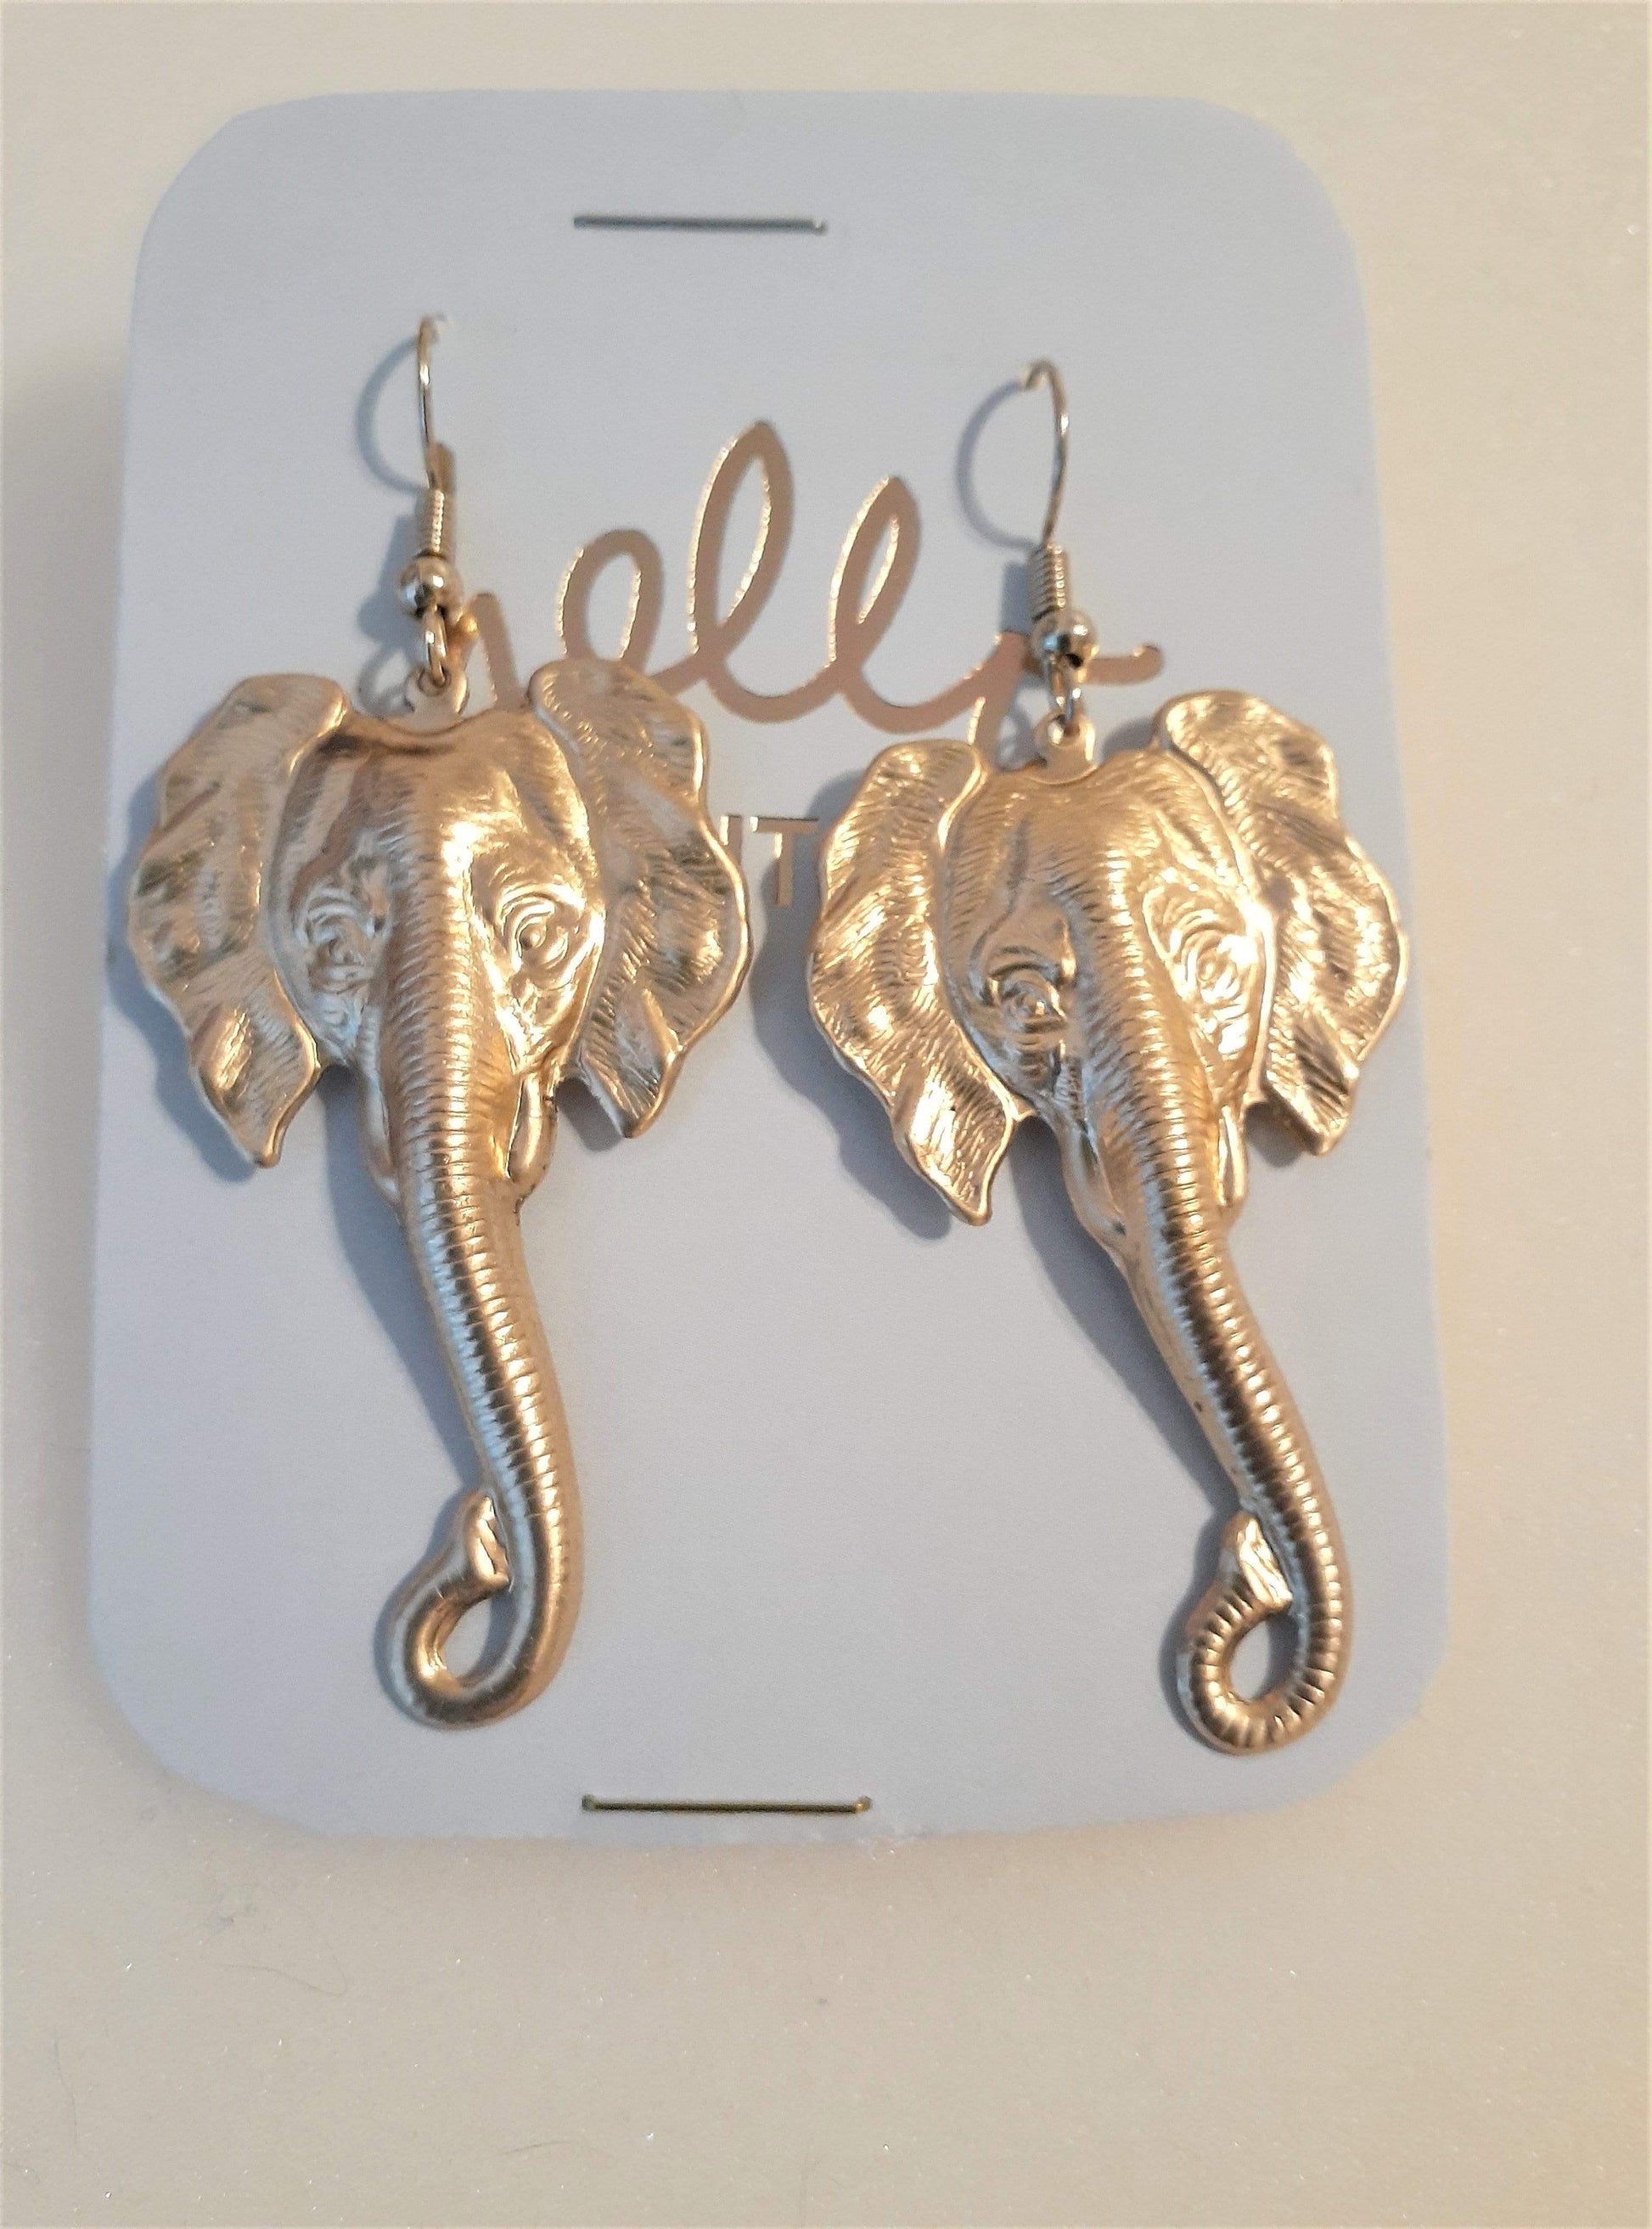 Large Elephant Brass Earrings - Matte Gold Plated Brass and Brass Studs Earrings Gold Plated Earrings on Fish hooks